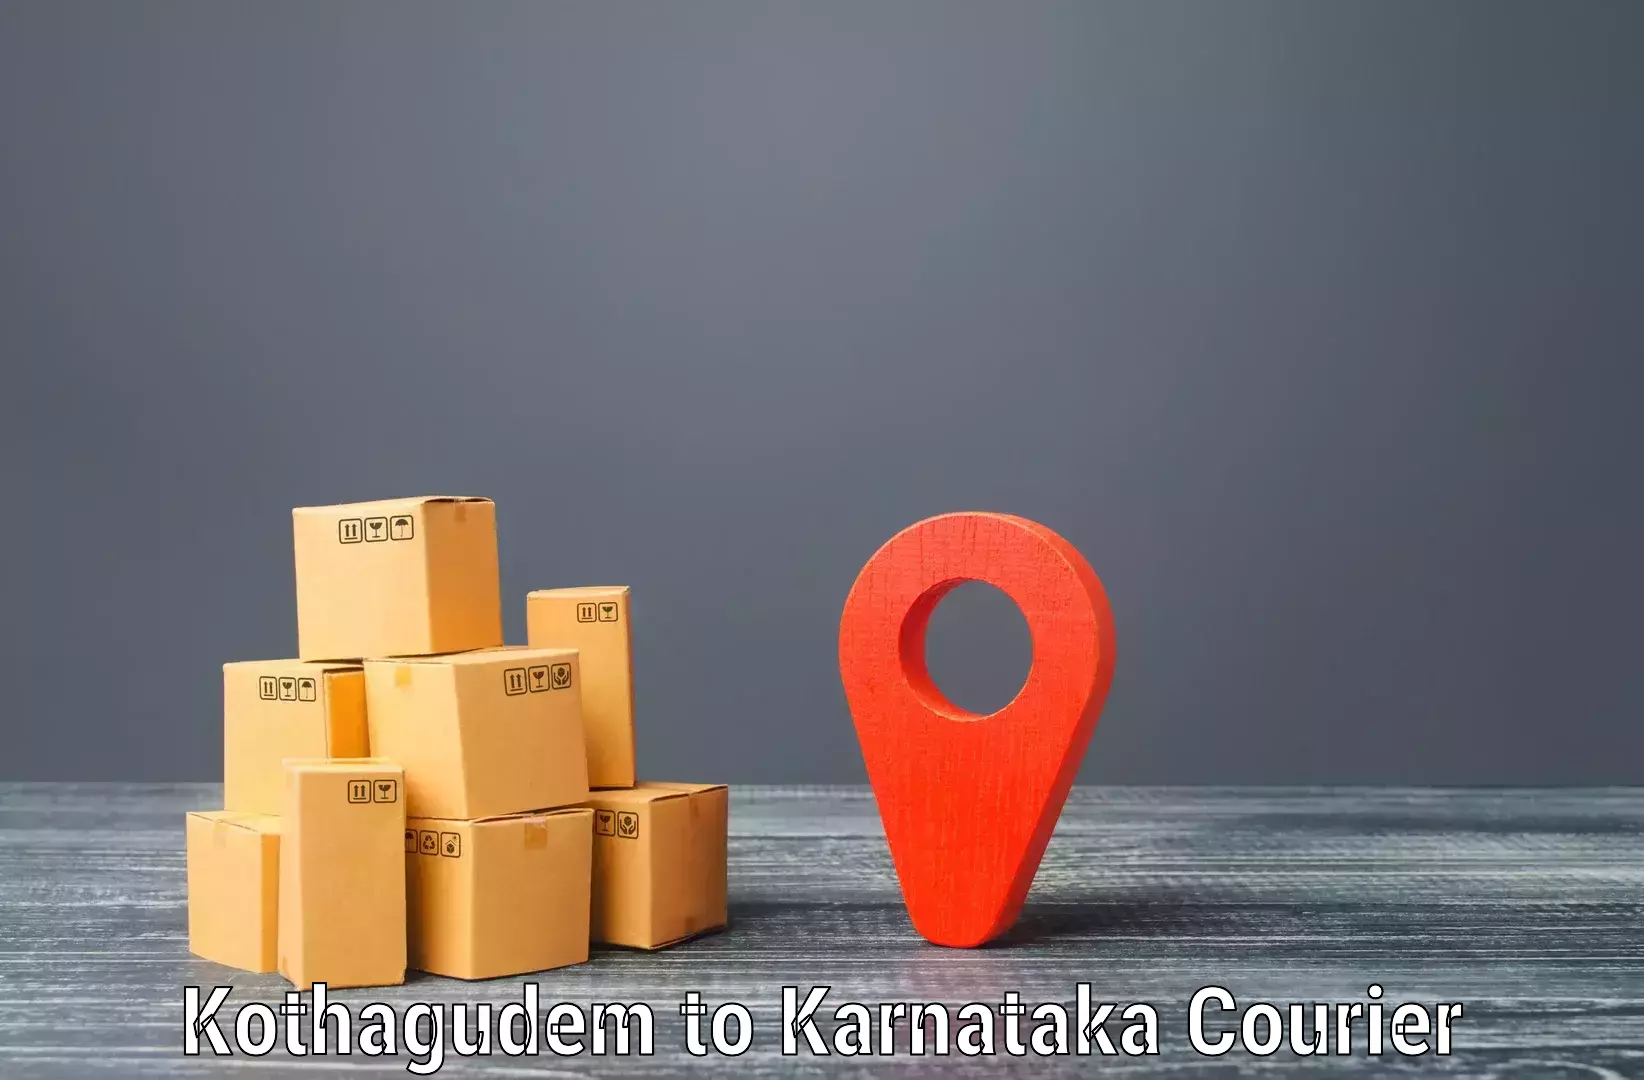 Doorstep delivery service Kothagudem to Aland Kalaburagi